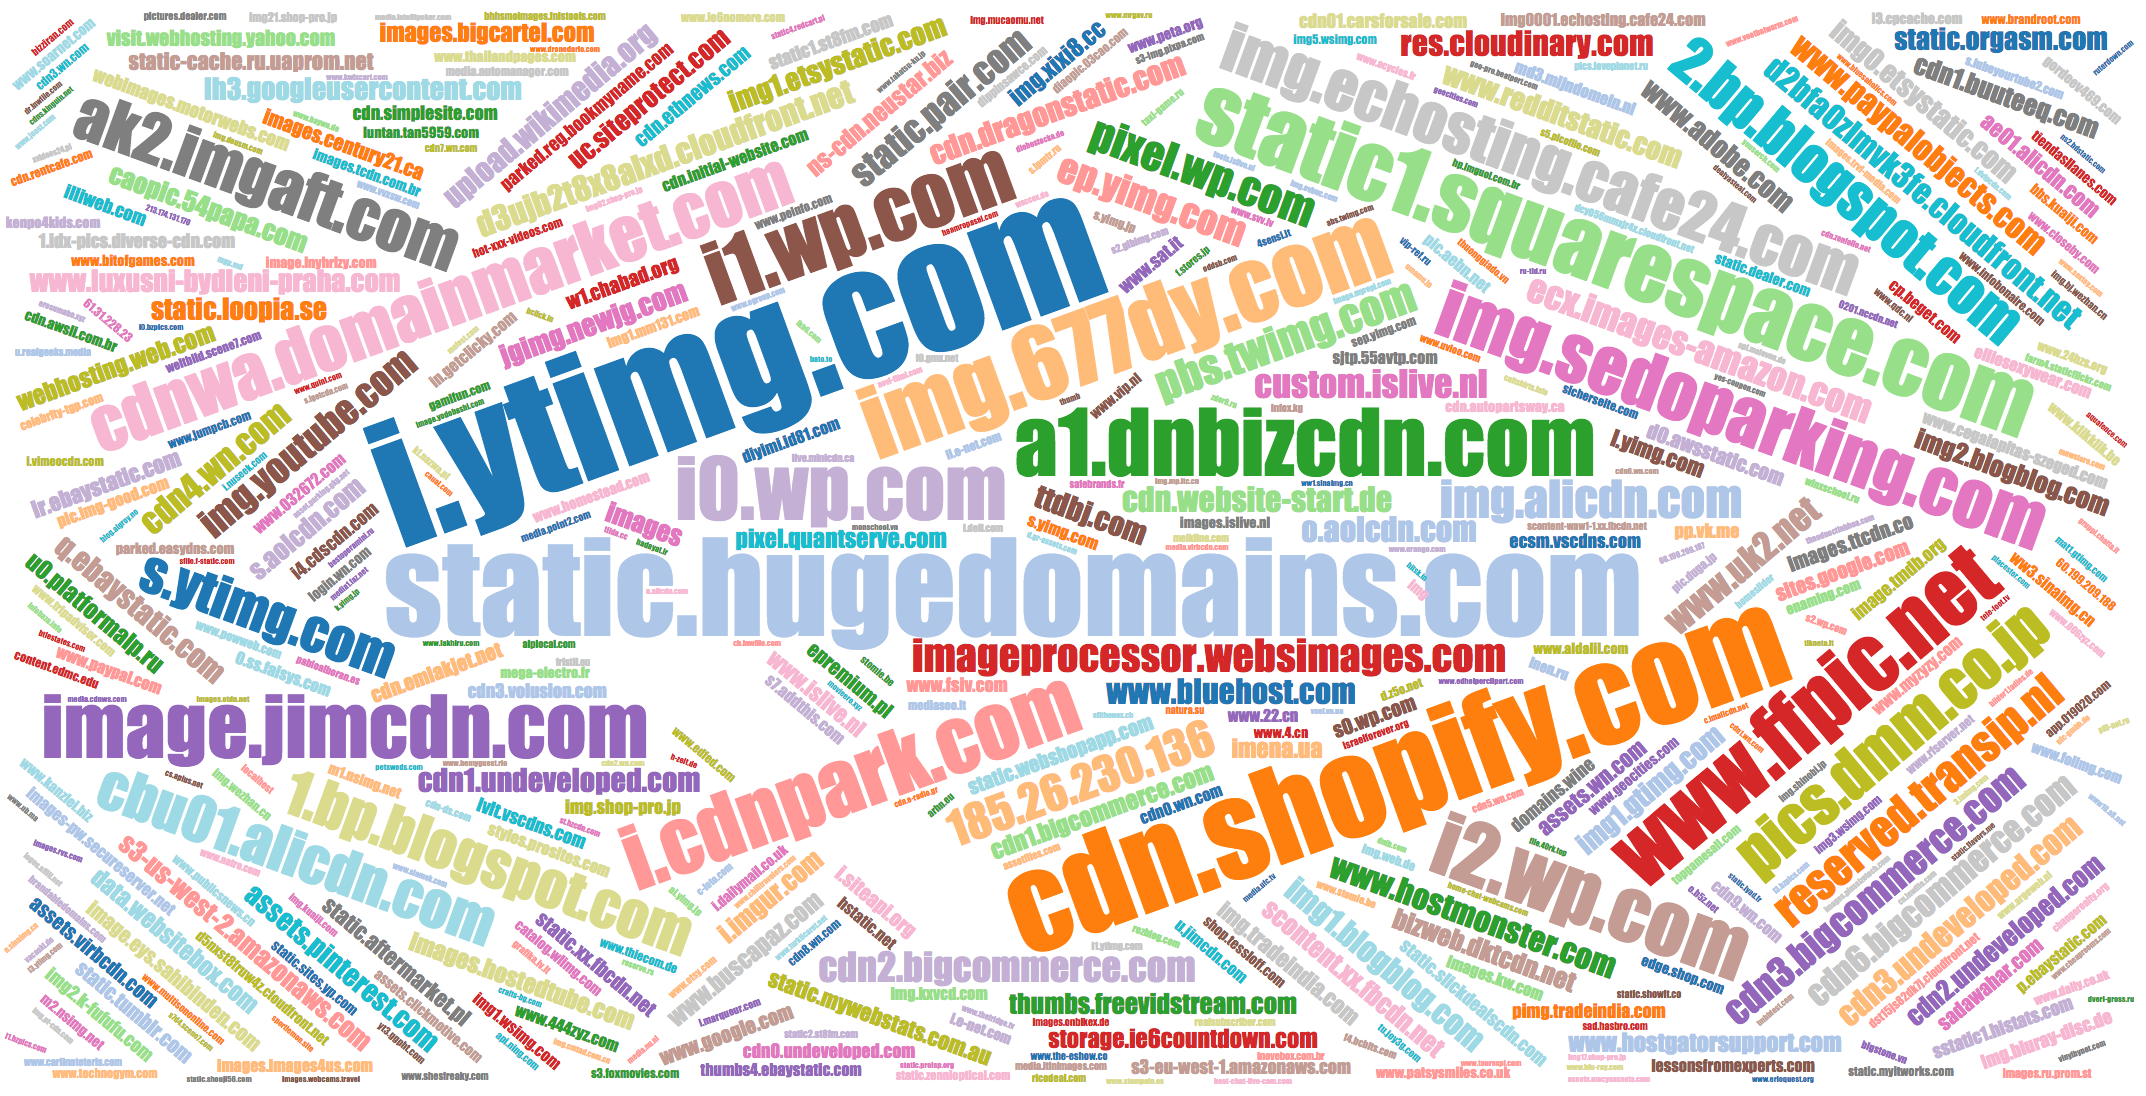 Popular names of IMG domains zzzy3qqqt.52notice.net, zy9tcsqt.pailewu.com, etc.